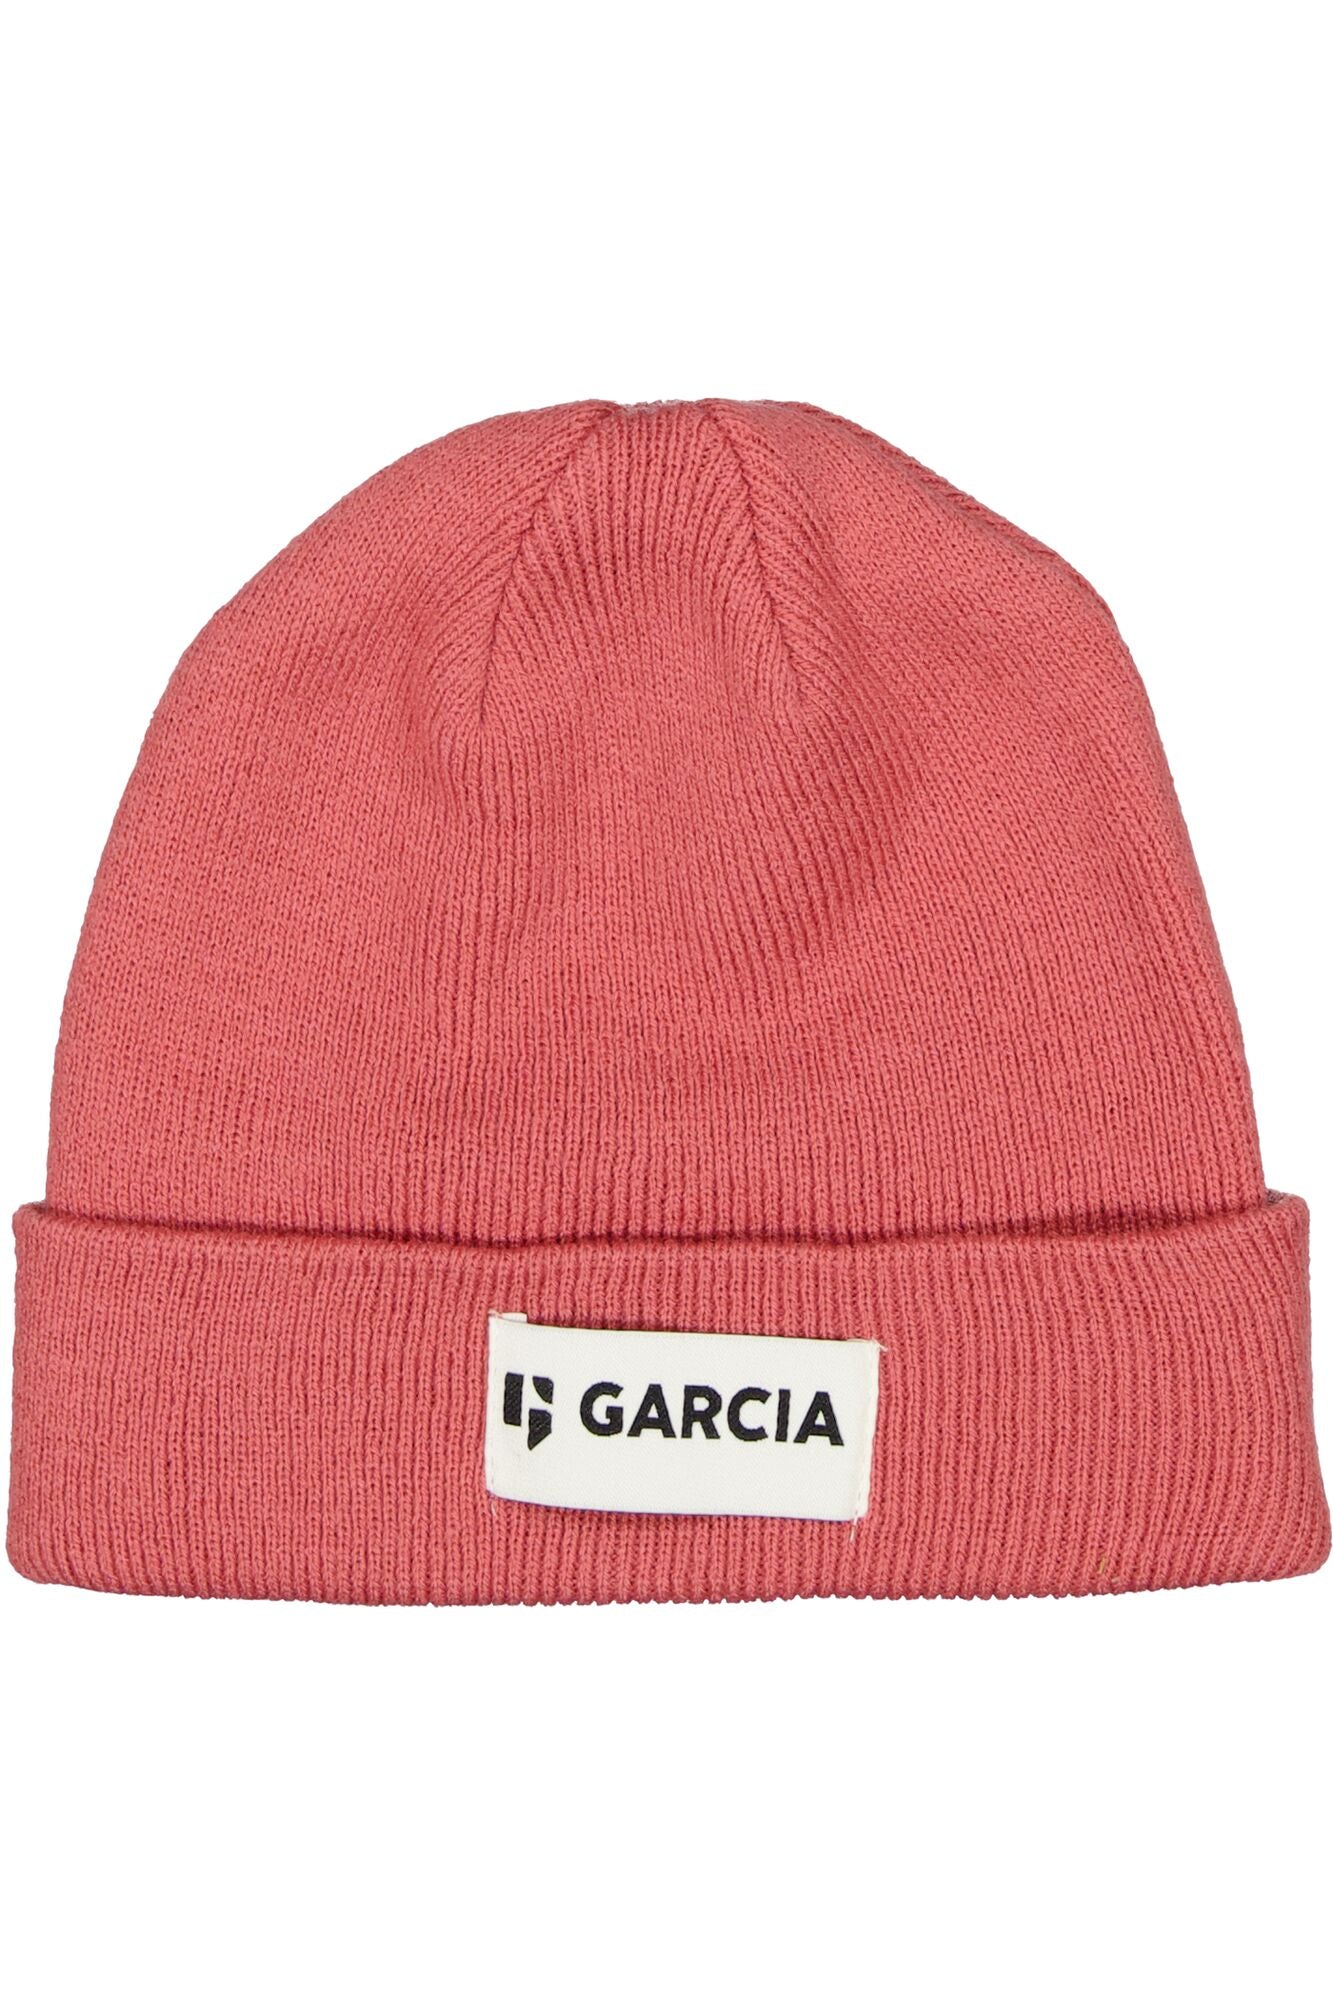 Garcia Girls Kids accessory T24800 girls hat